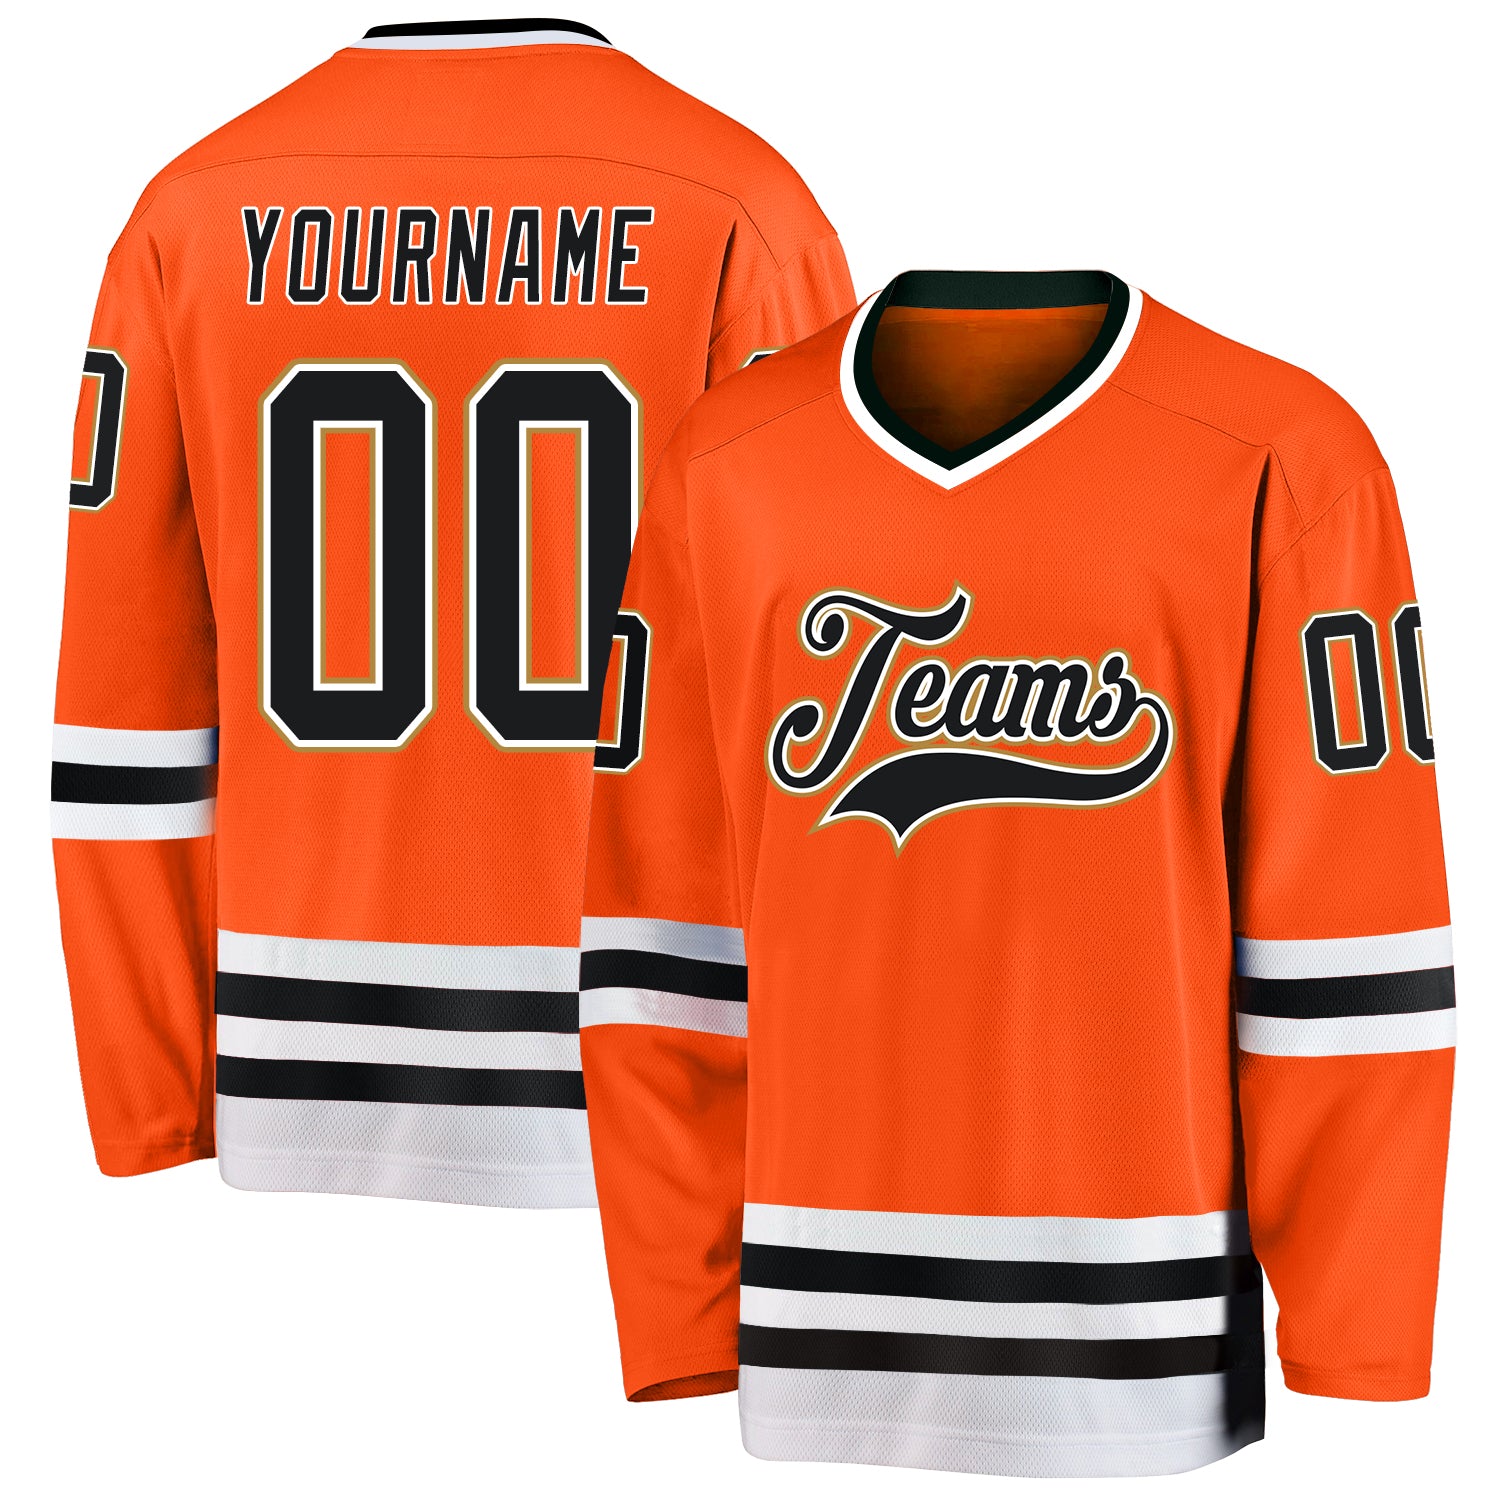 Stadium Adult Hockey Jersey - Orange/Black/Gray